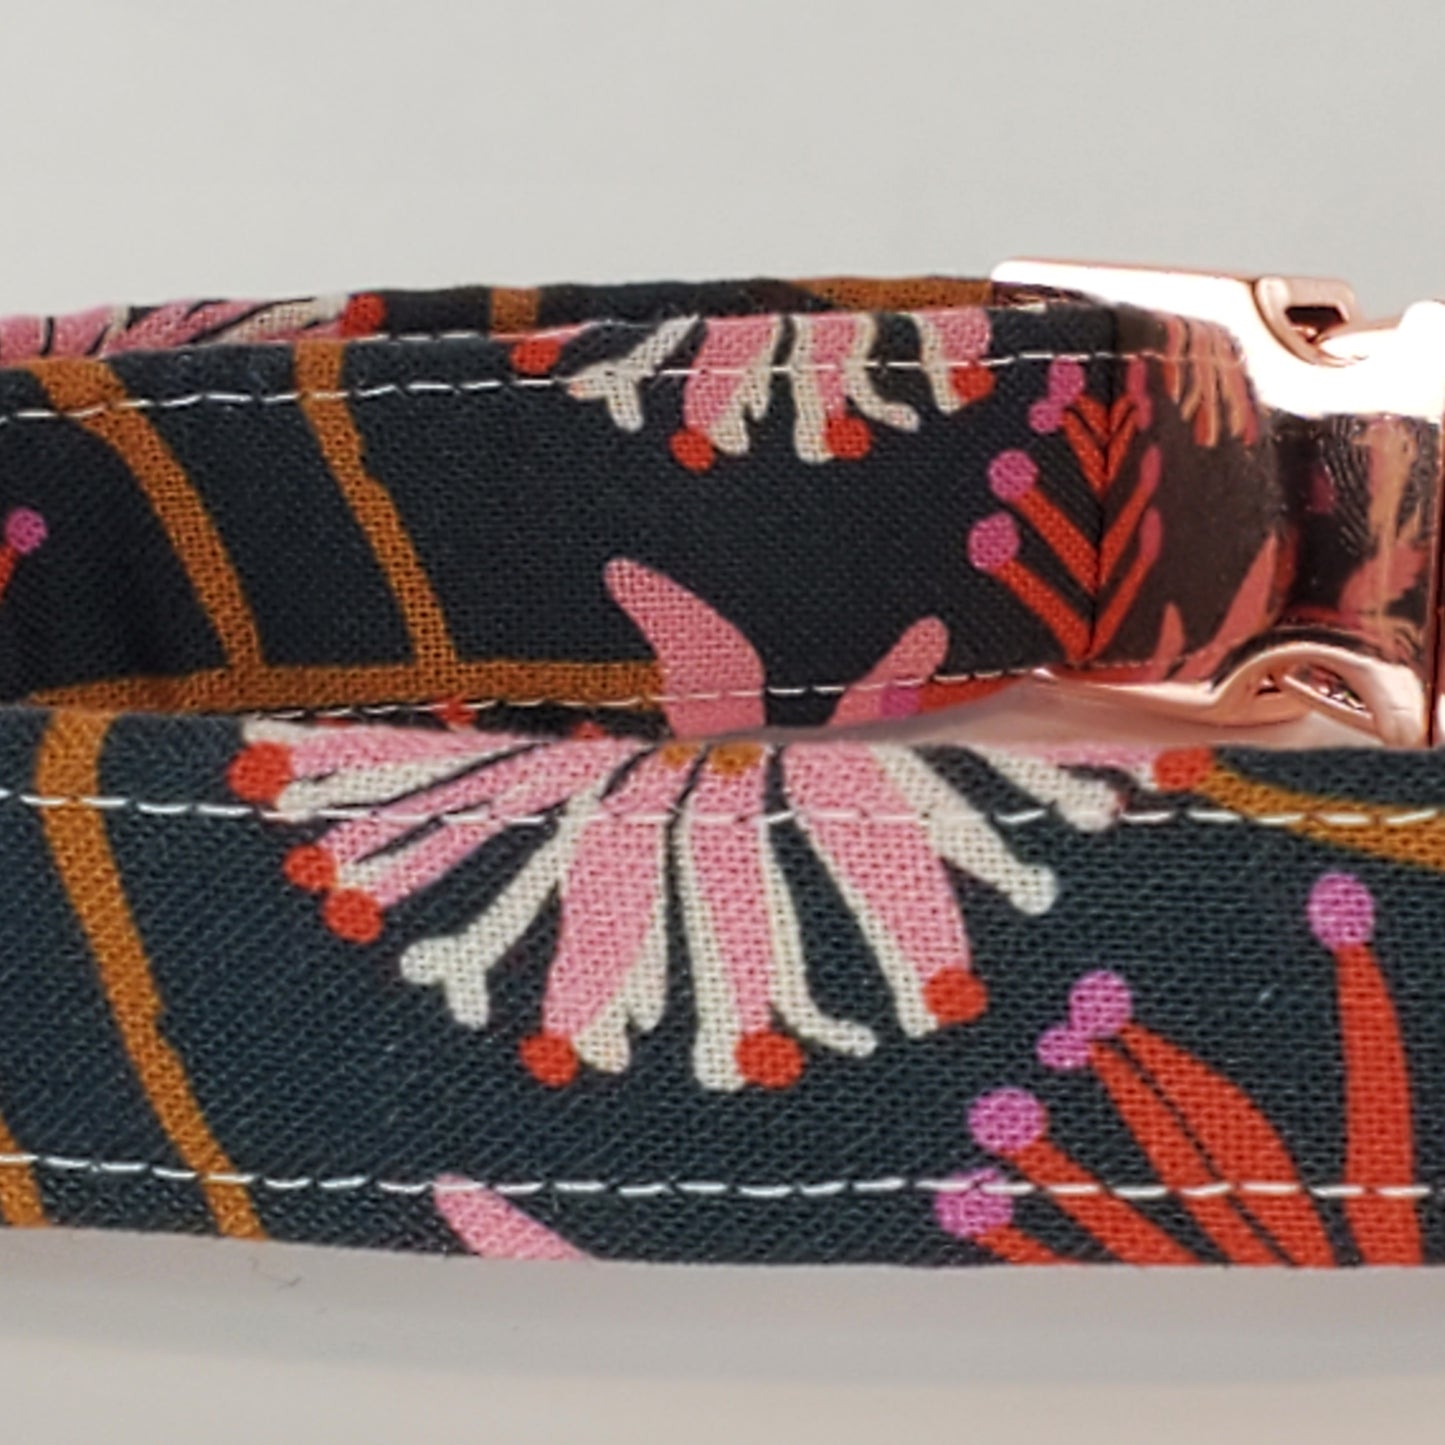 Small Australian floral bursts fabric dog collar